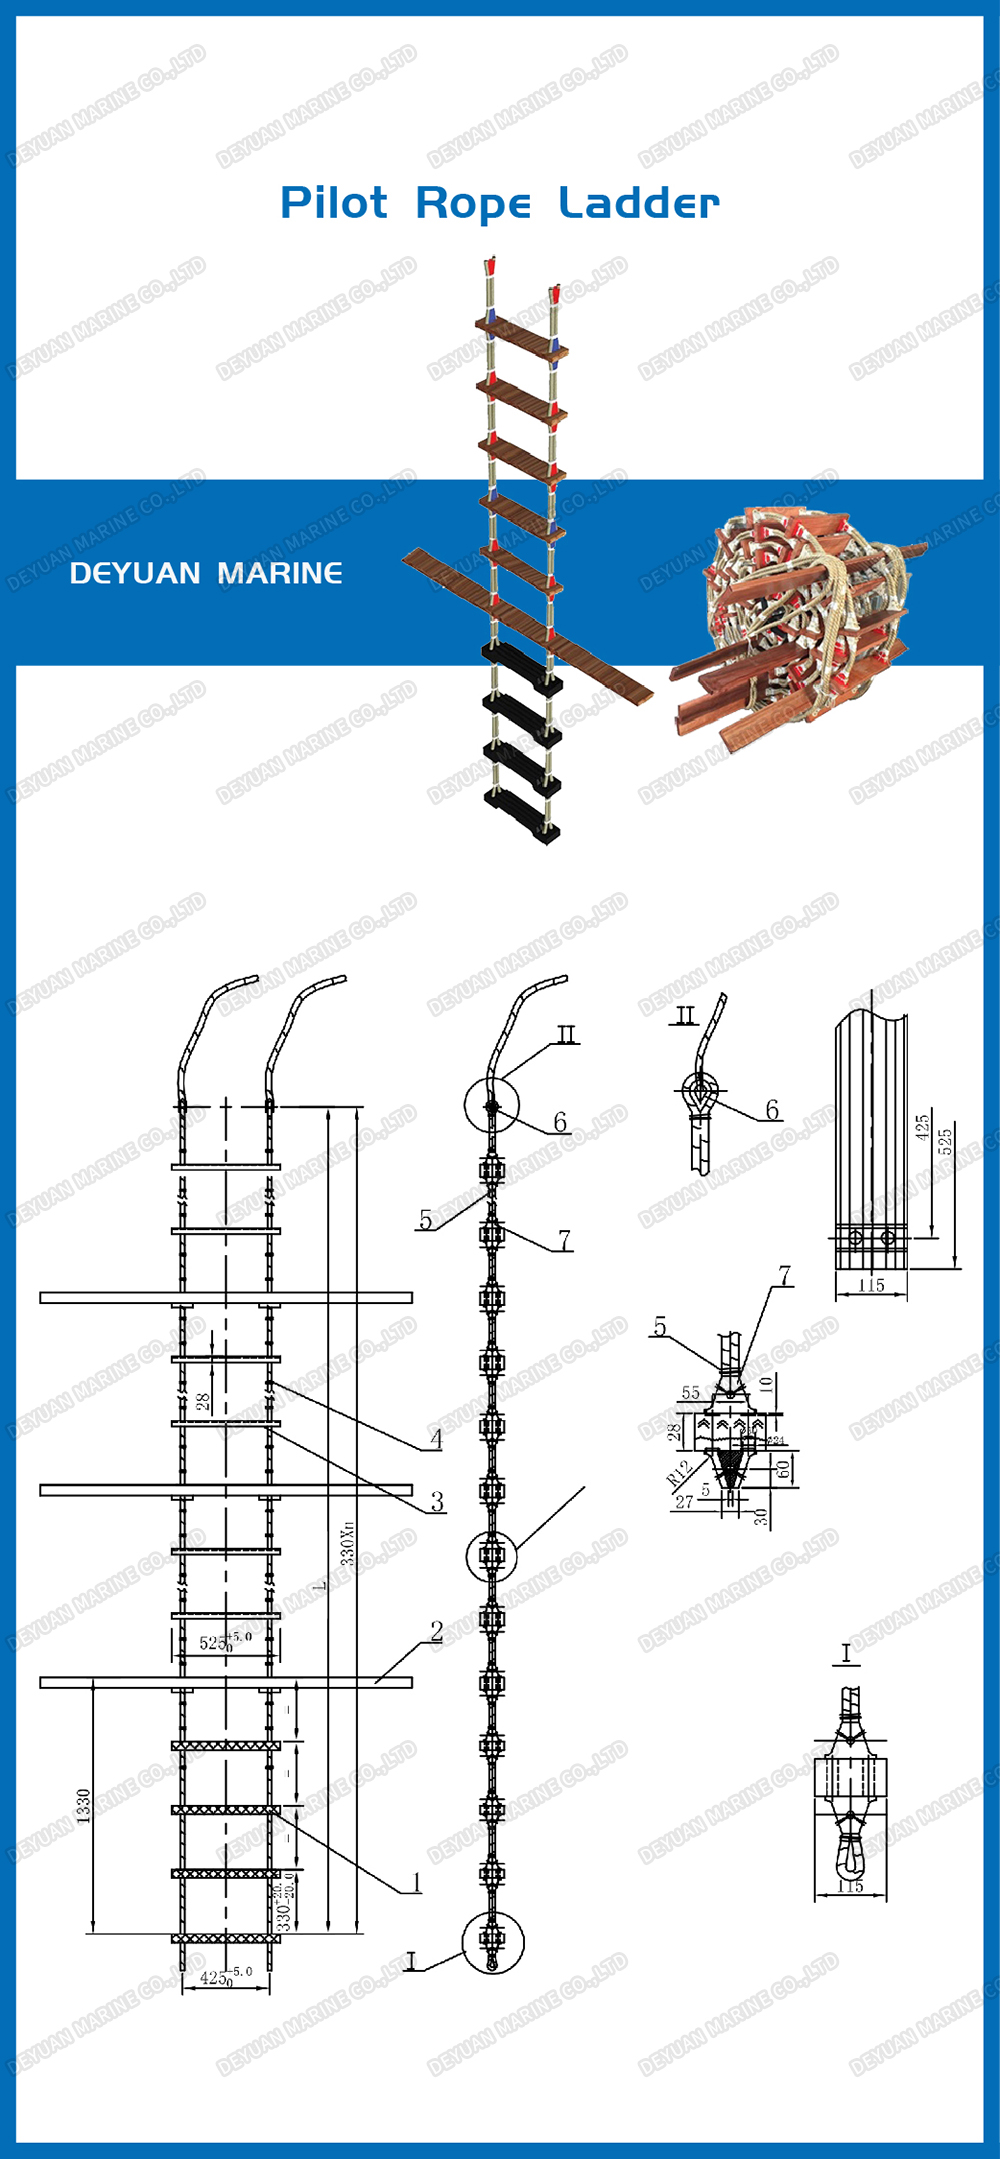 wooden pilot rope ladder-DEYUAN MARINE